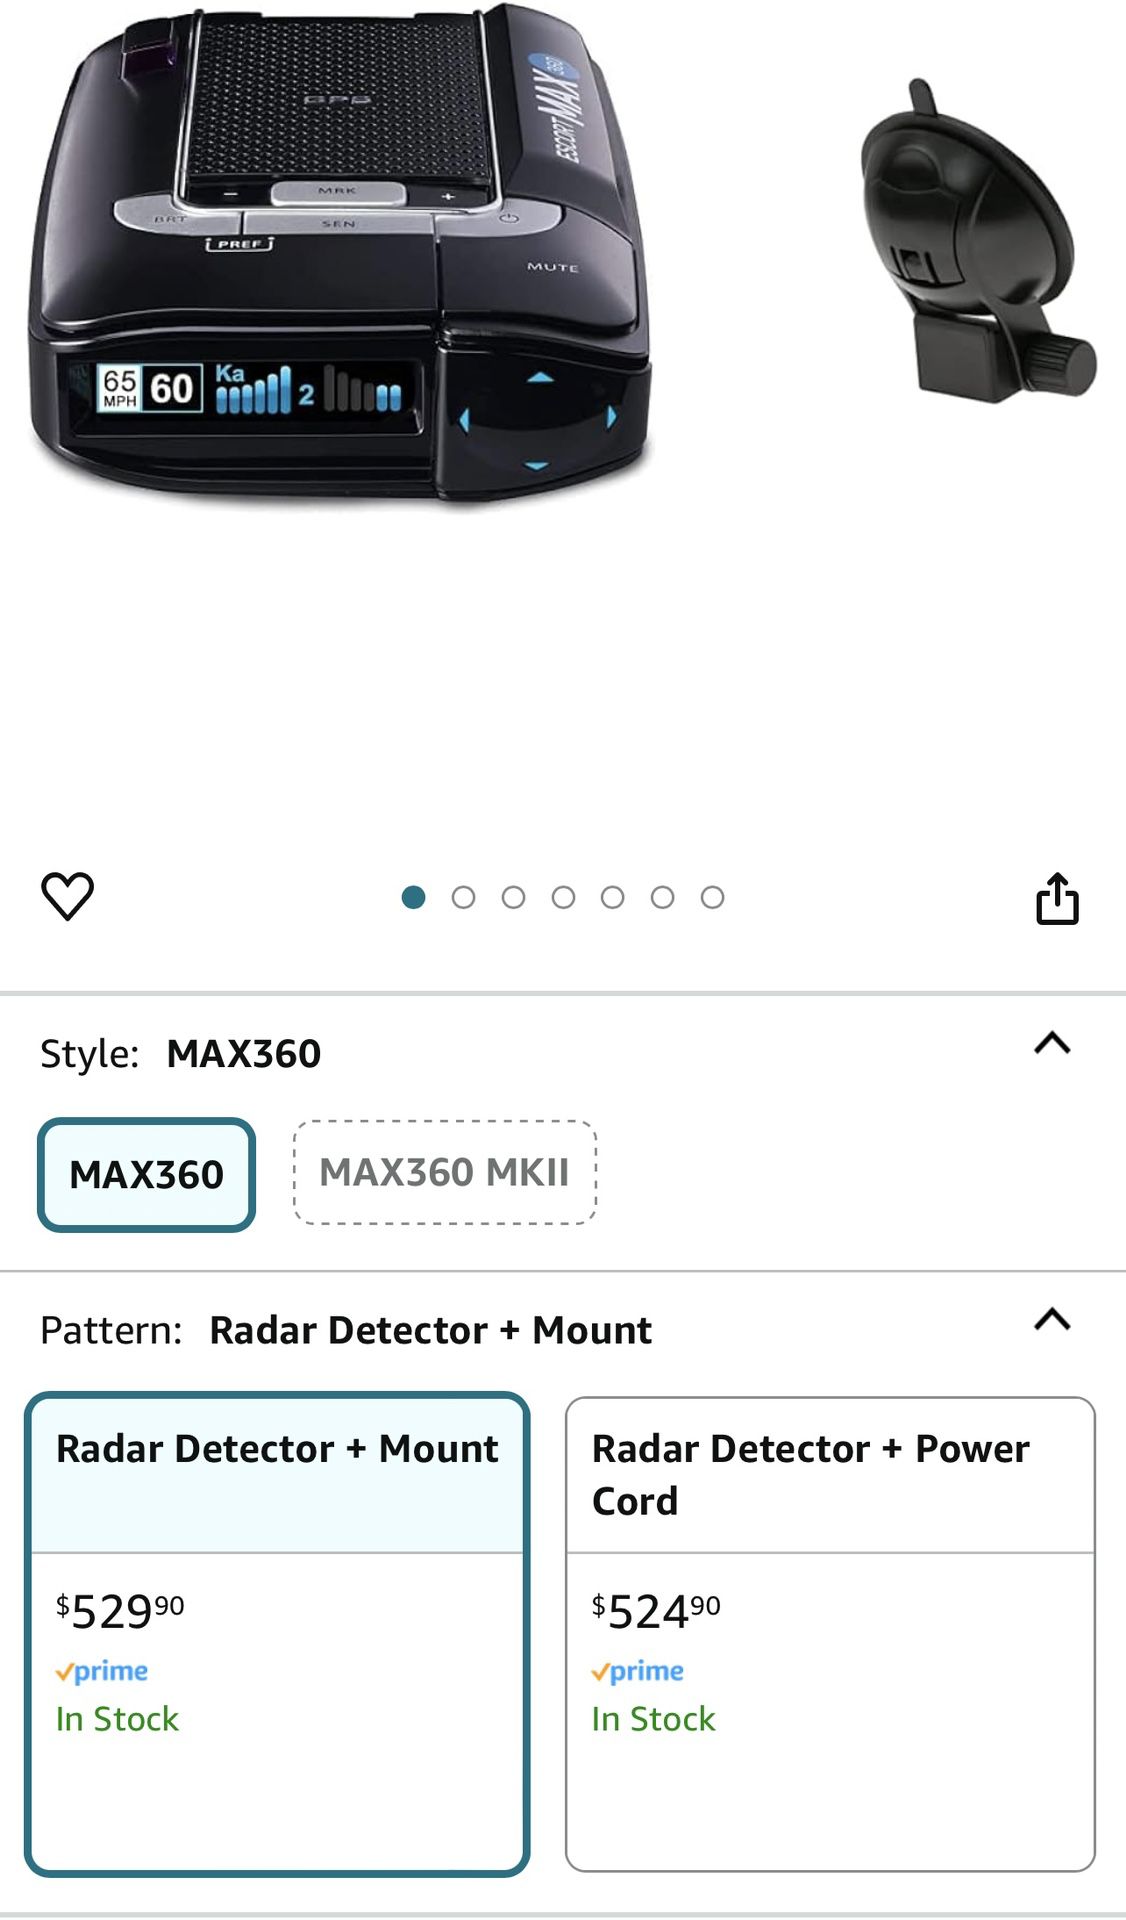 Escort max 360 Radar